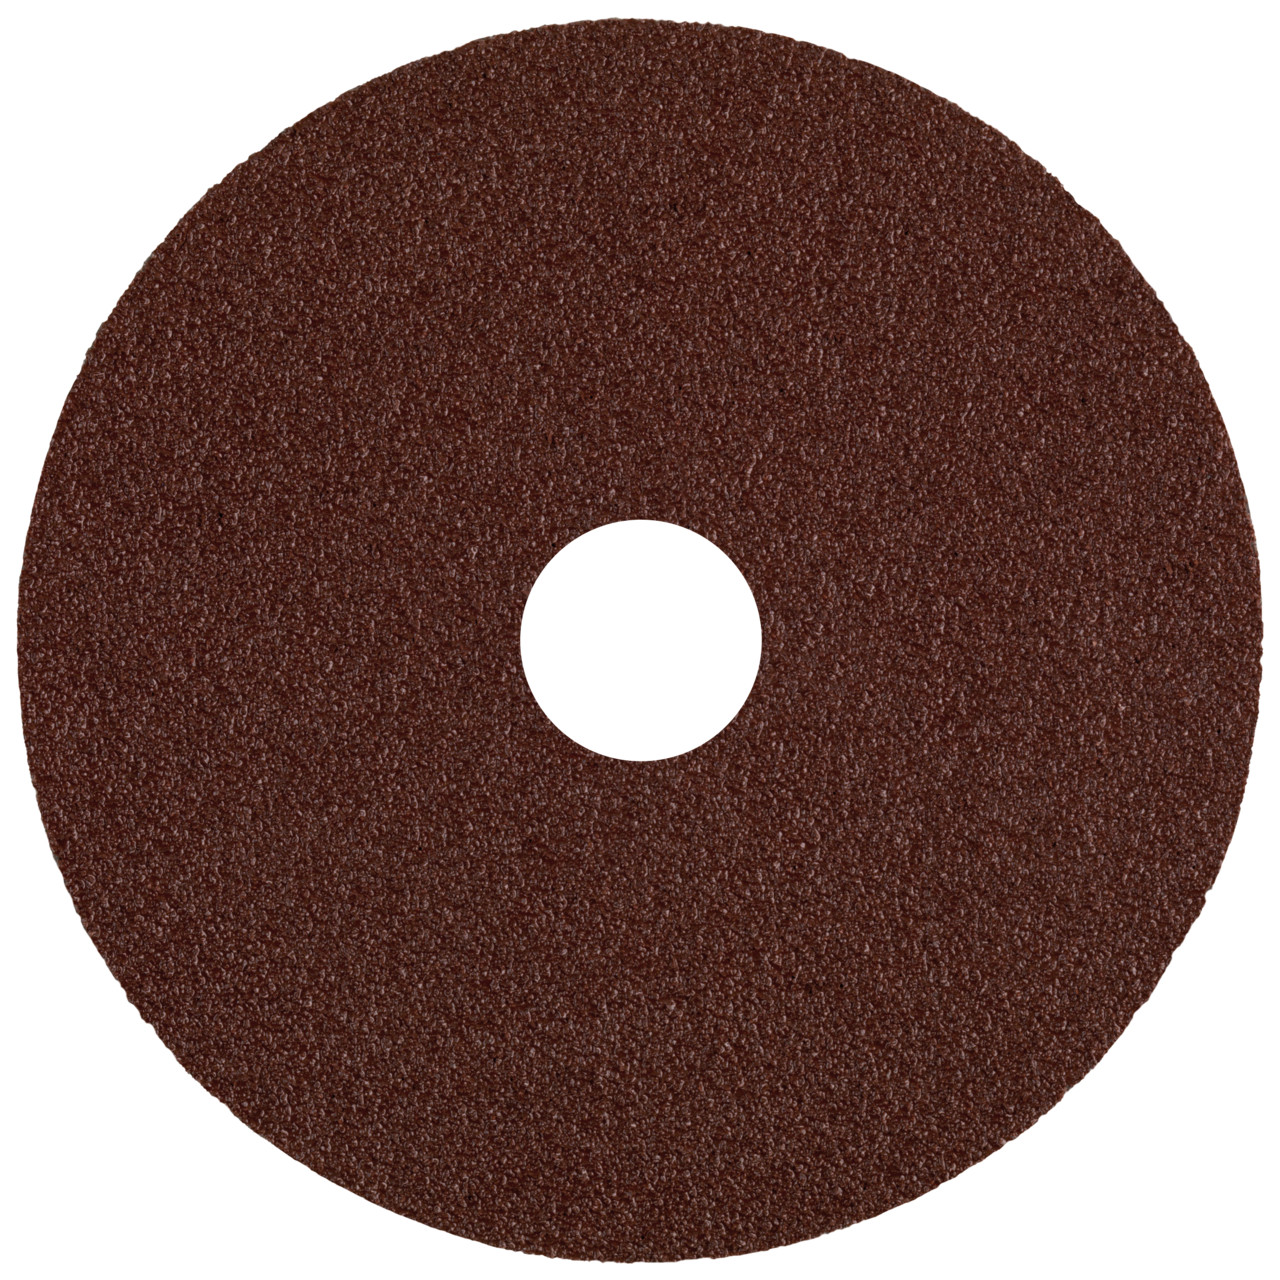 Tyrolit A-B02 V Vulcanised fibre disc DxH 180x22 For steel, non-ferrous metals and wood, P100, shape: DISC, Art. 34286512